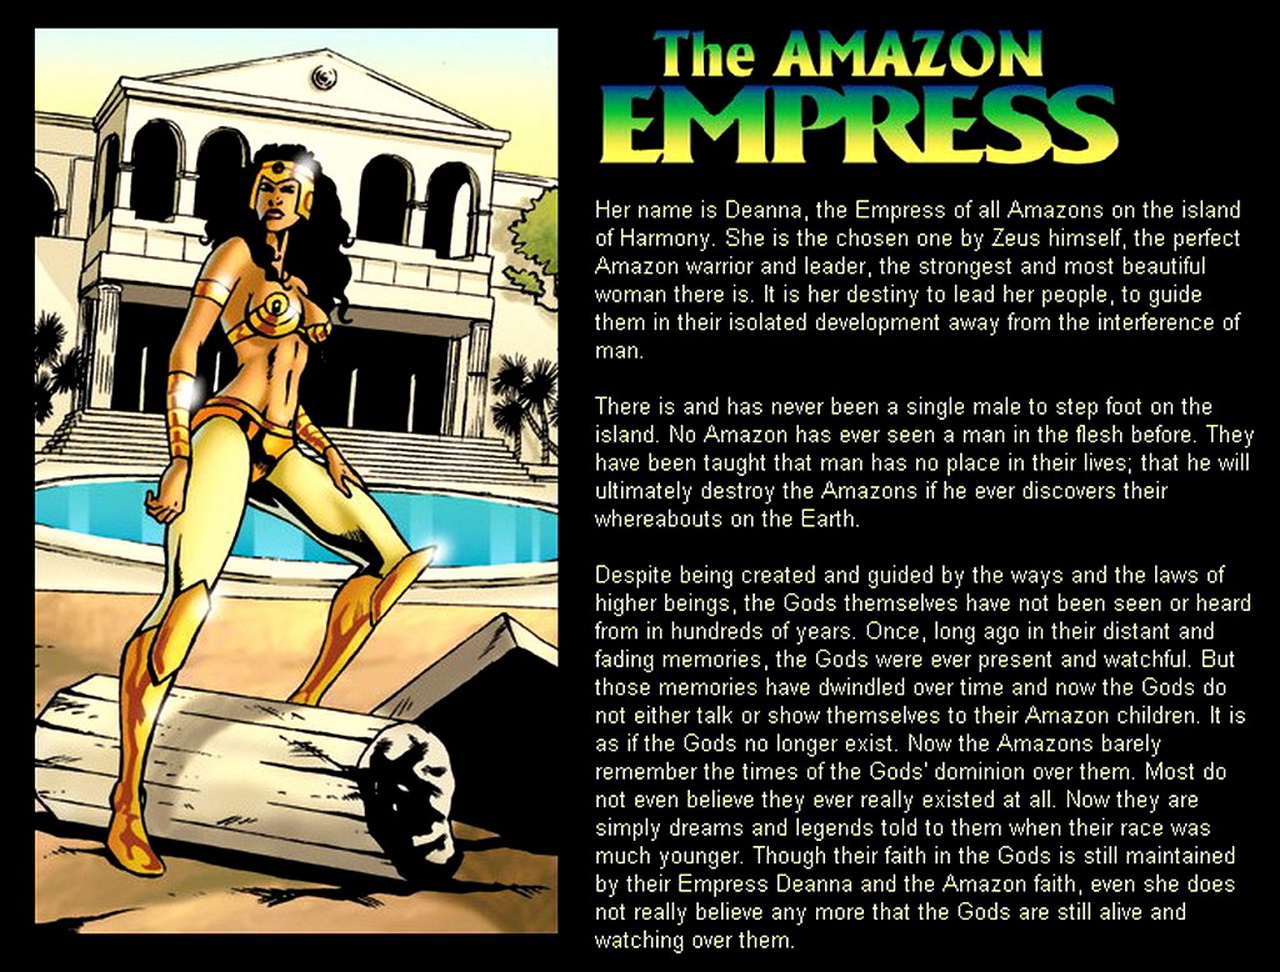 The Amazon Empress